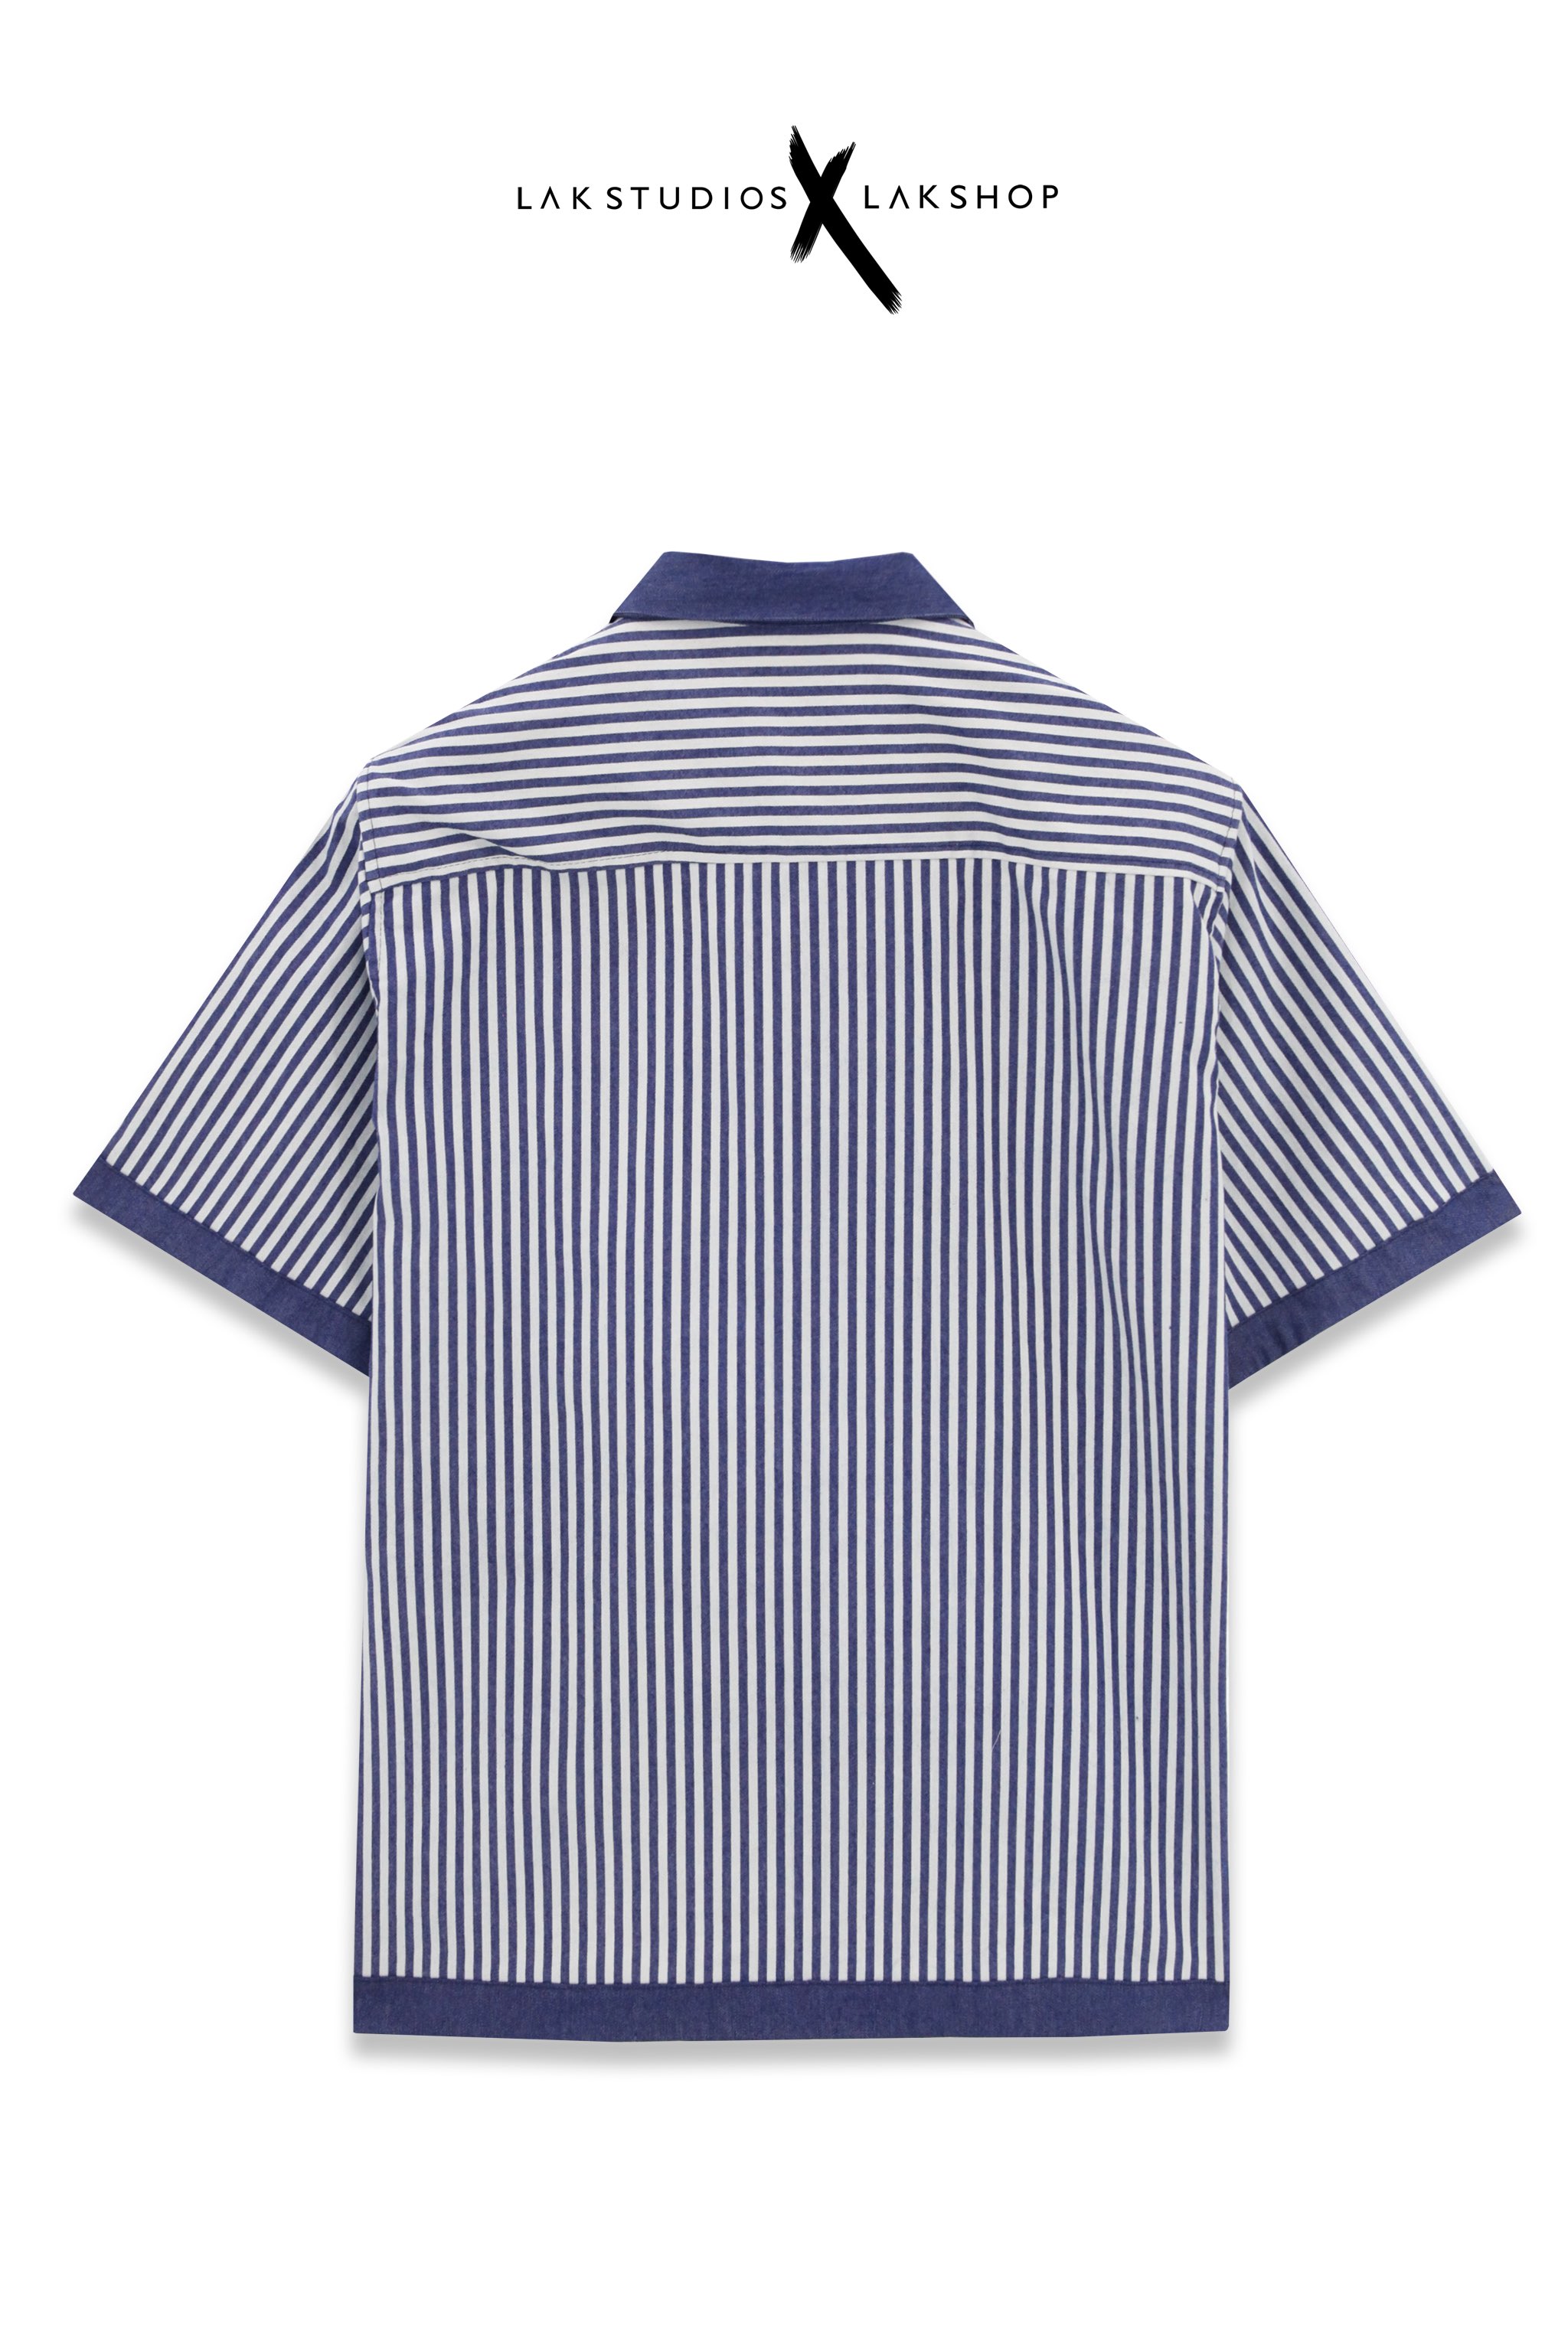 Lak Studios Blue Stripe Denim Shirt